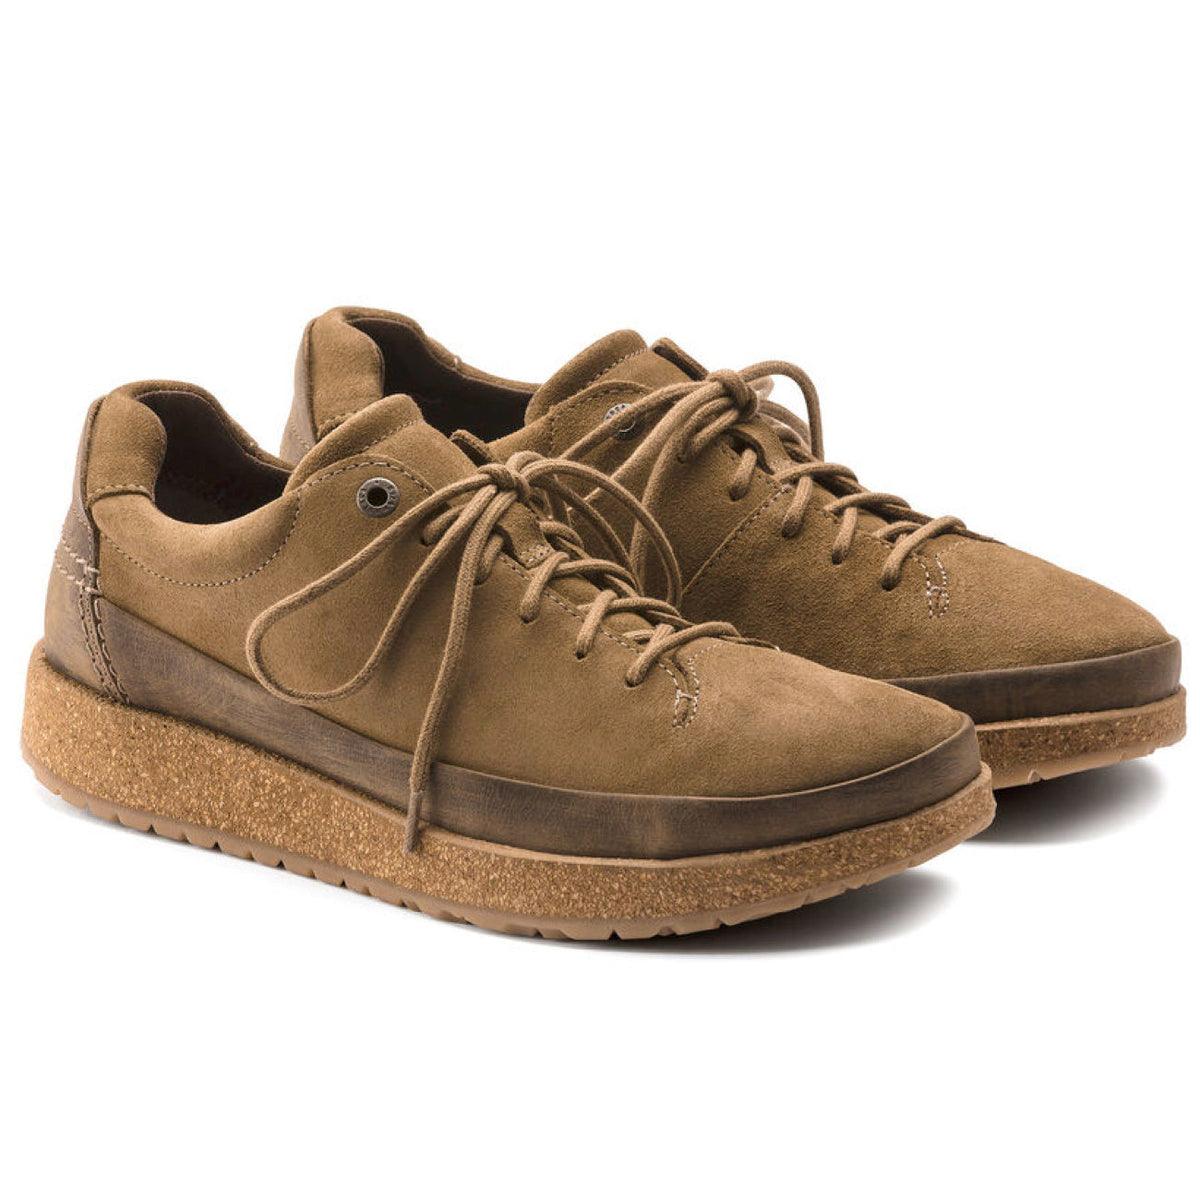 Birkenstock Shoes, Honnef Low, Suede Leather, Regular Fit, Tea Suede Shoes Birkenstock Seasonal 